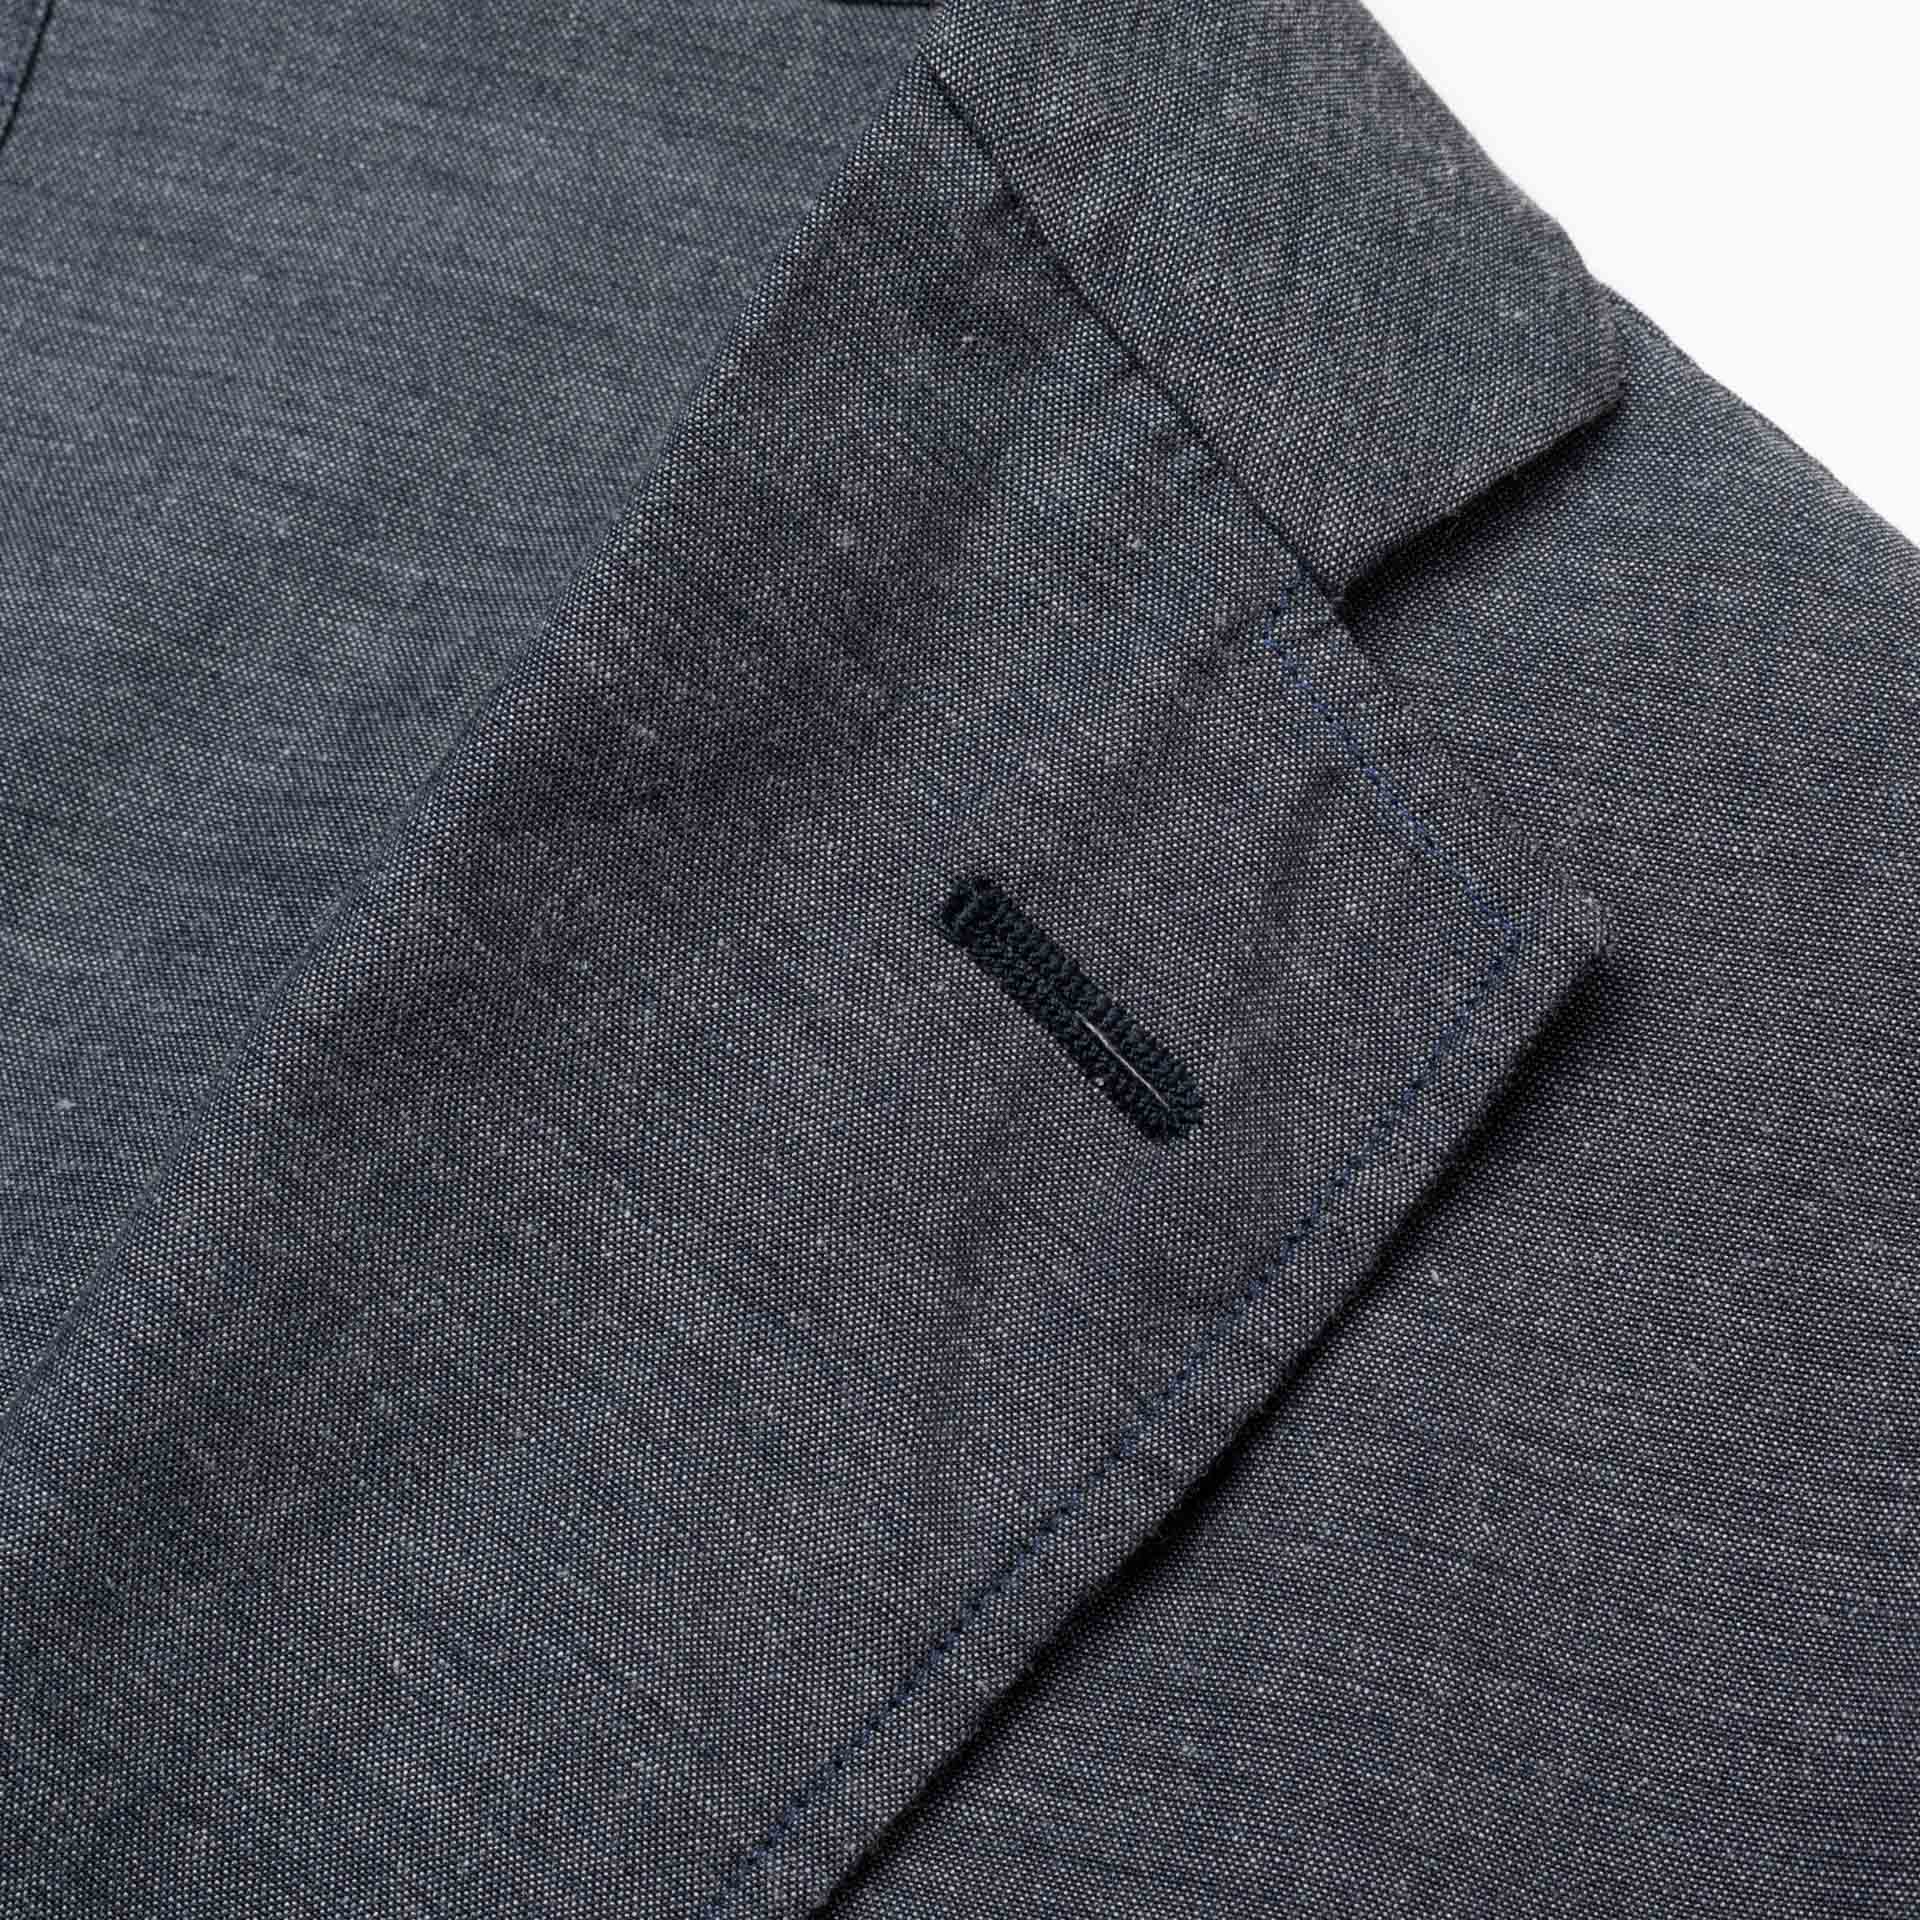 BOGLIOLI "68" Gray Wool-Cotton-Mohair Unconstructed Jacket EU 50 NEW US 40 BOGLIOLI